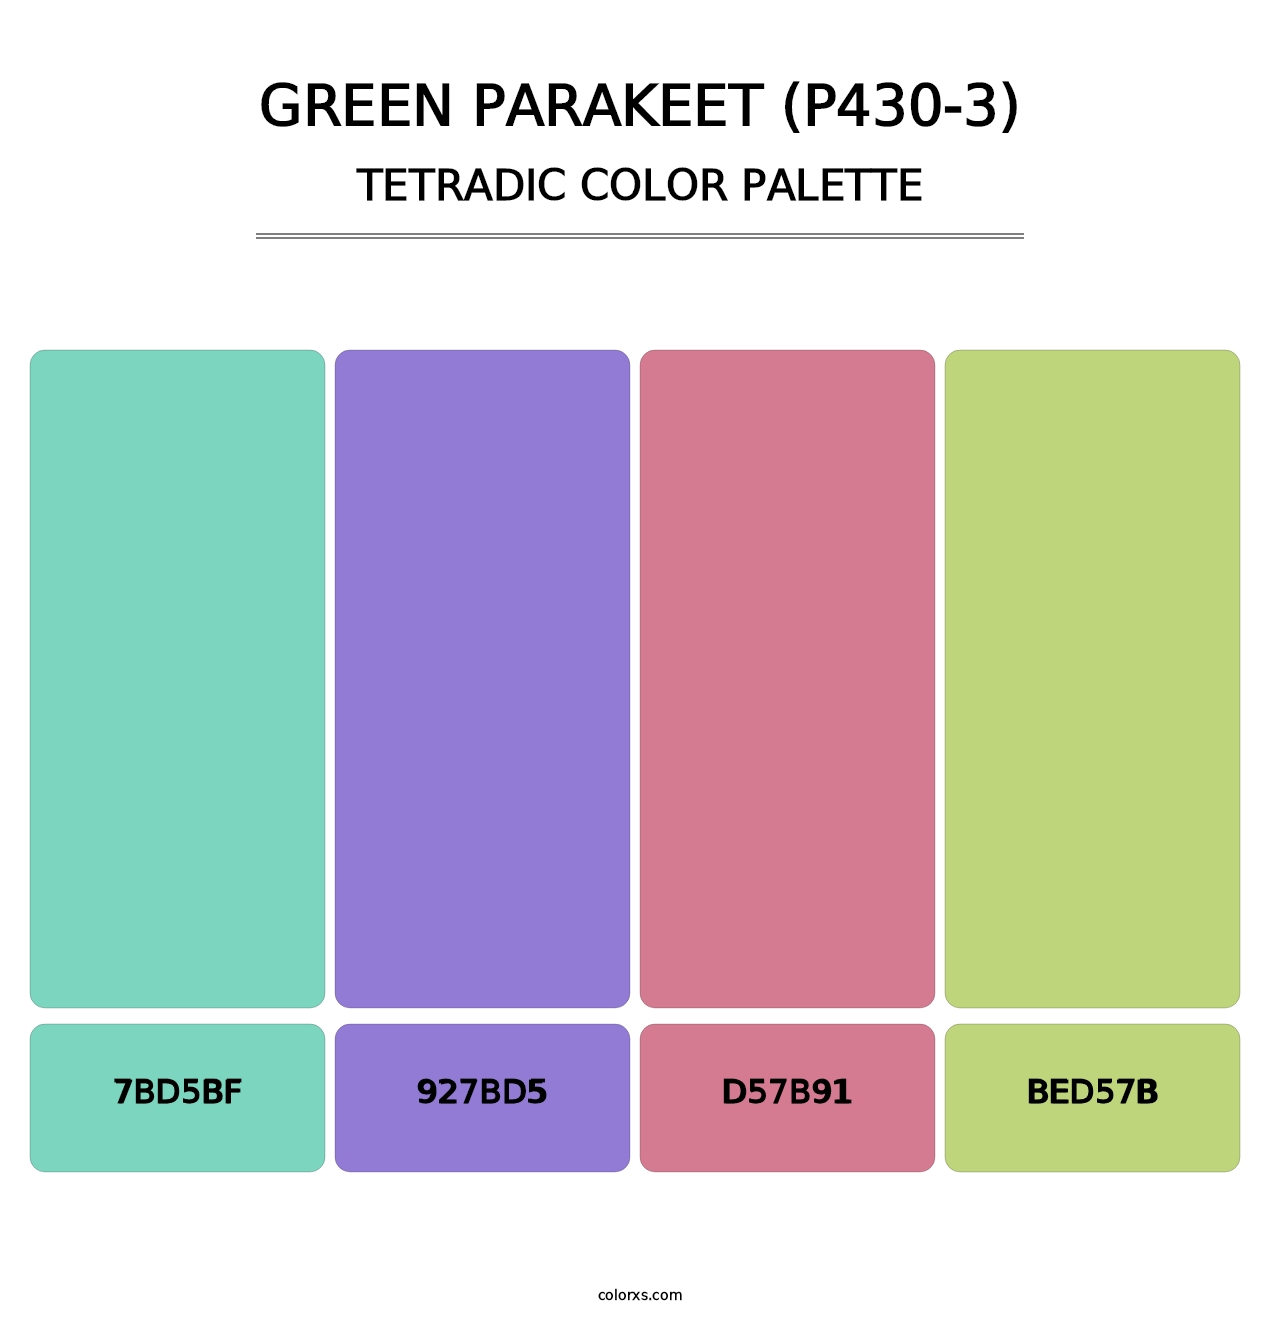 Green Parakeet (P430-3) - Tetradic Color Palette